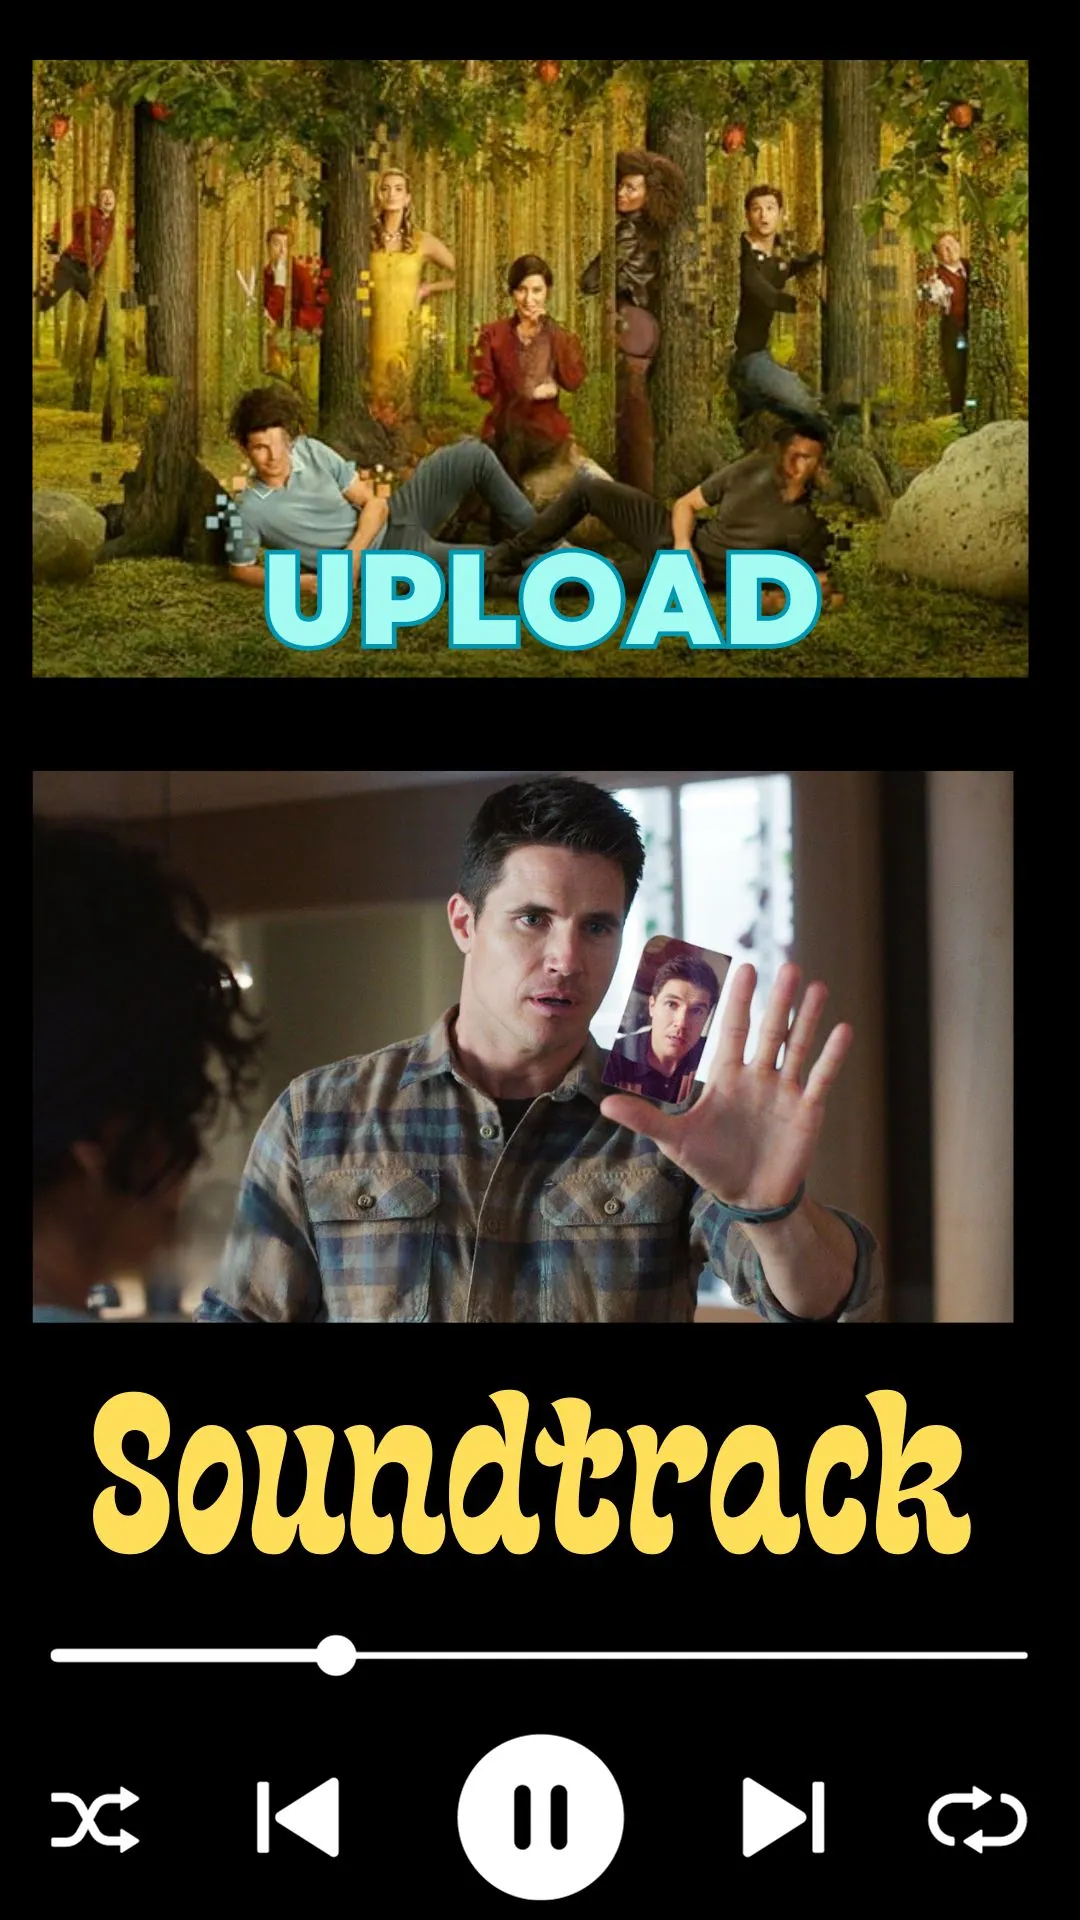 Upload Season 3 Soundtrack